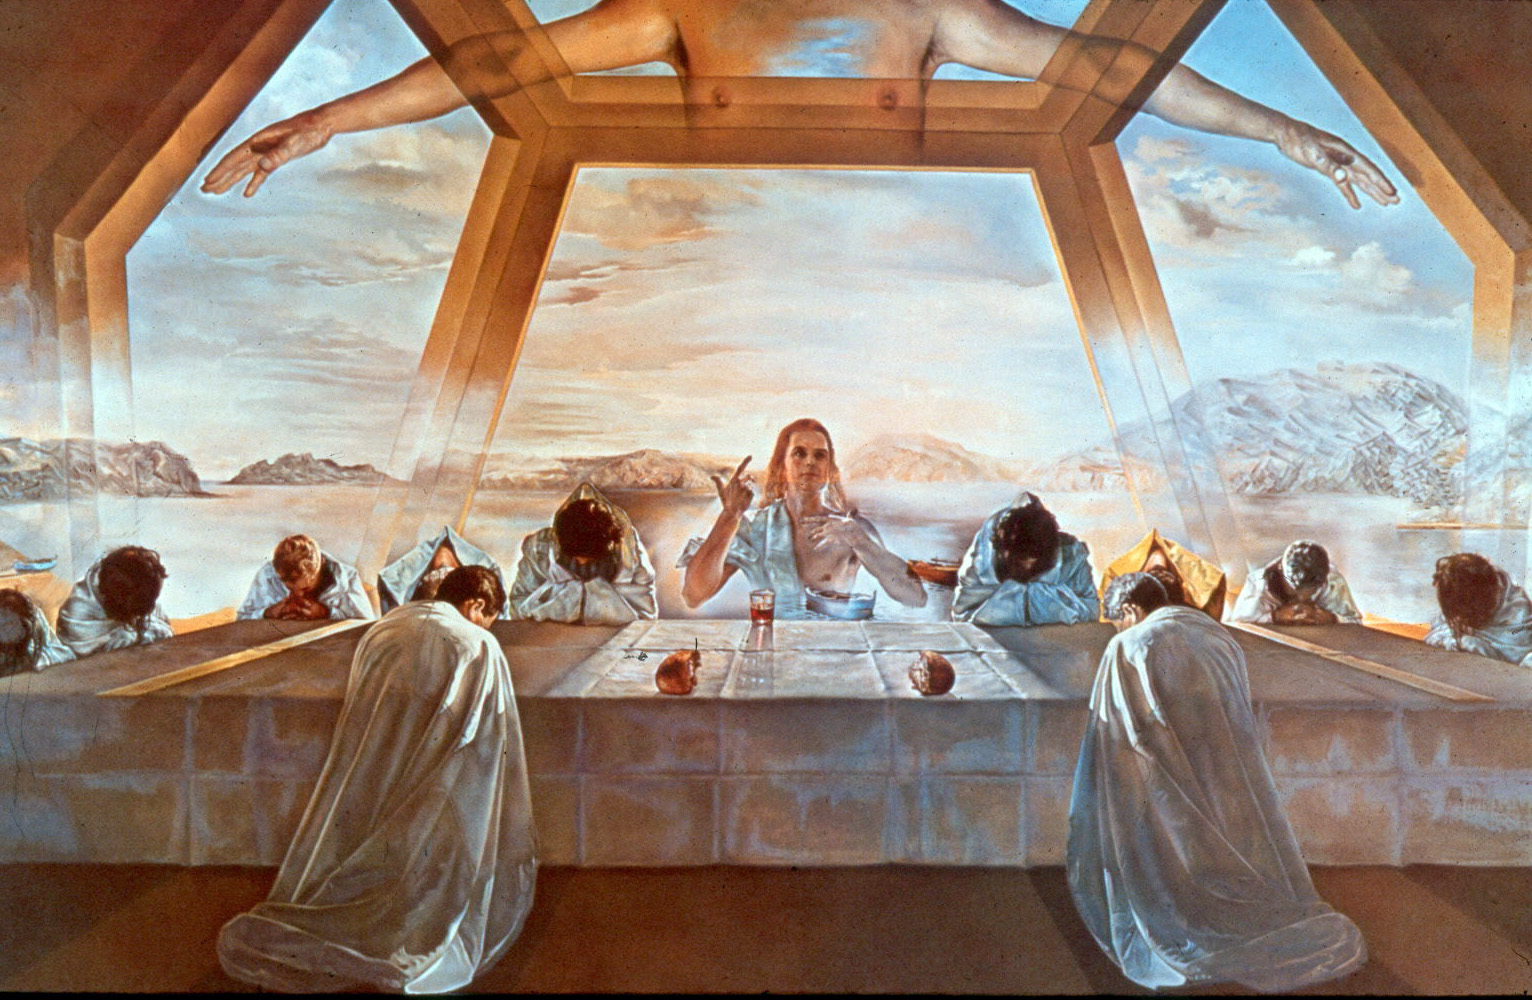 dali-sacrament-of-the-last-supper-1955.jpg